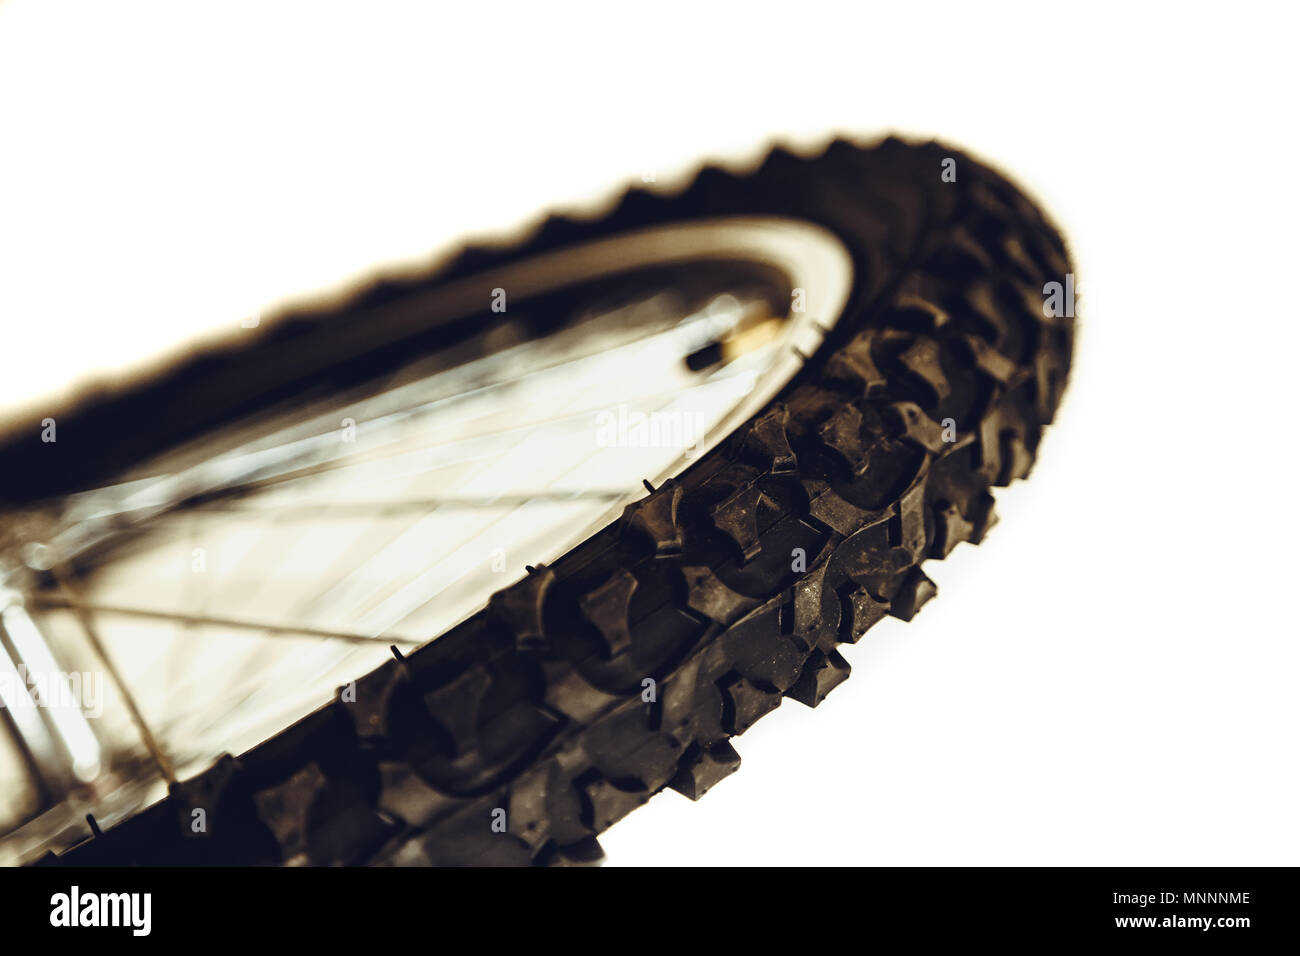 Vorderrad von Fahrrad. Gummi Fahrrad Reifen close-up. Mountainbike. Rad  protector Profil Stockfotografie - Alamy